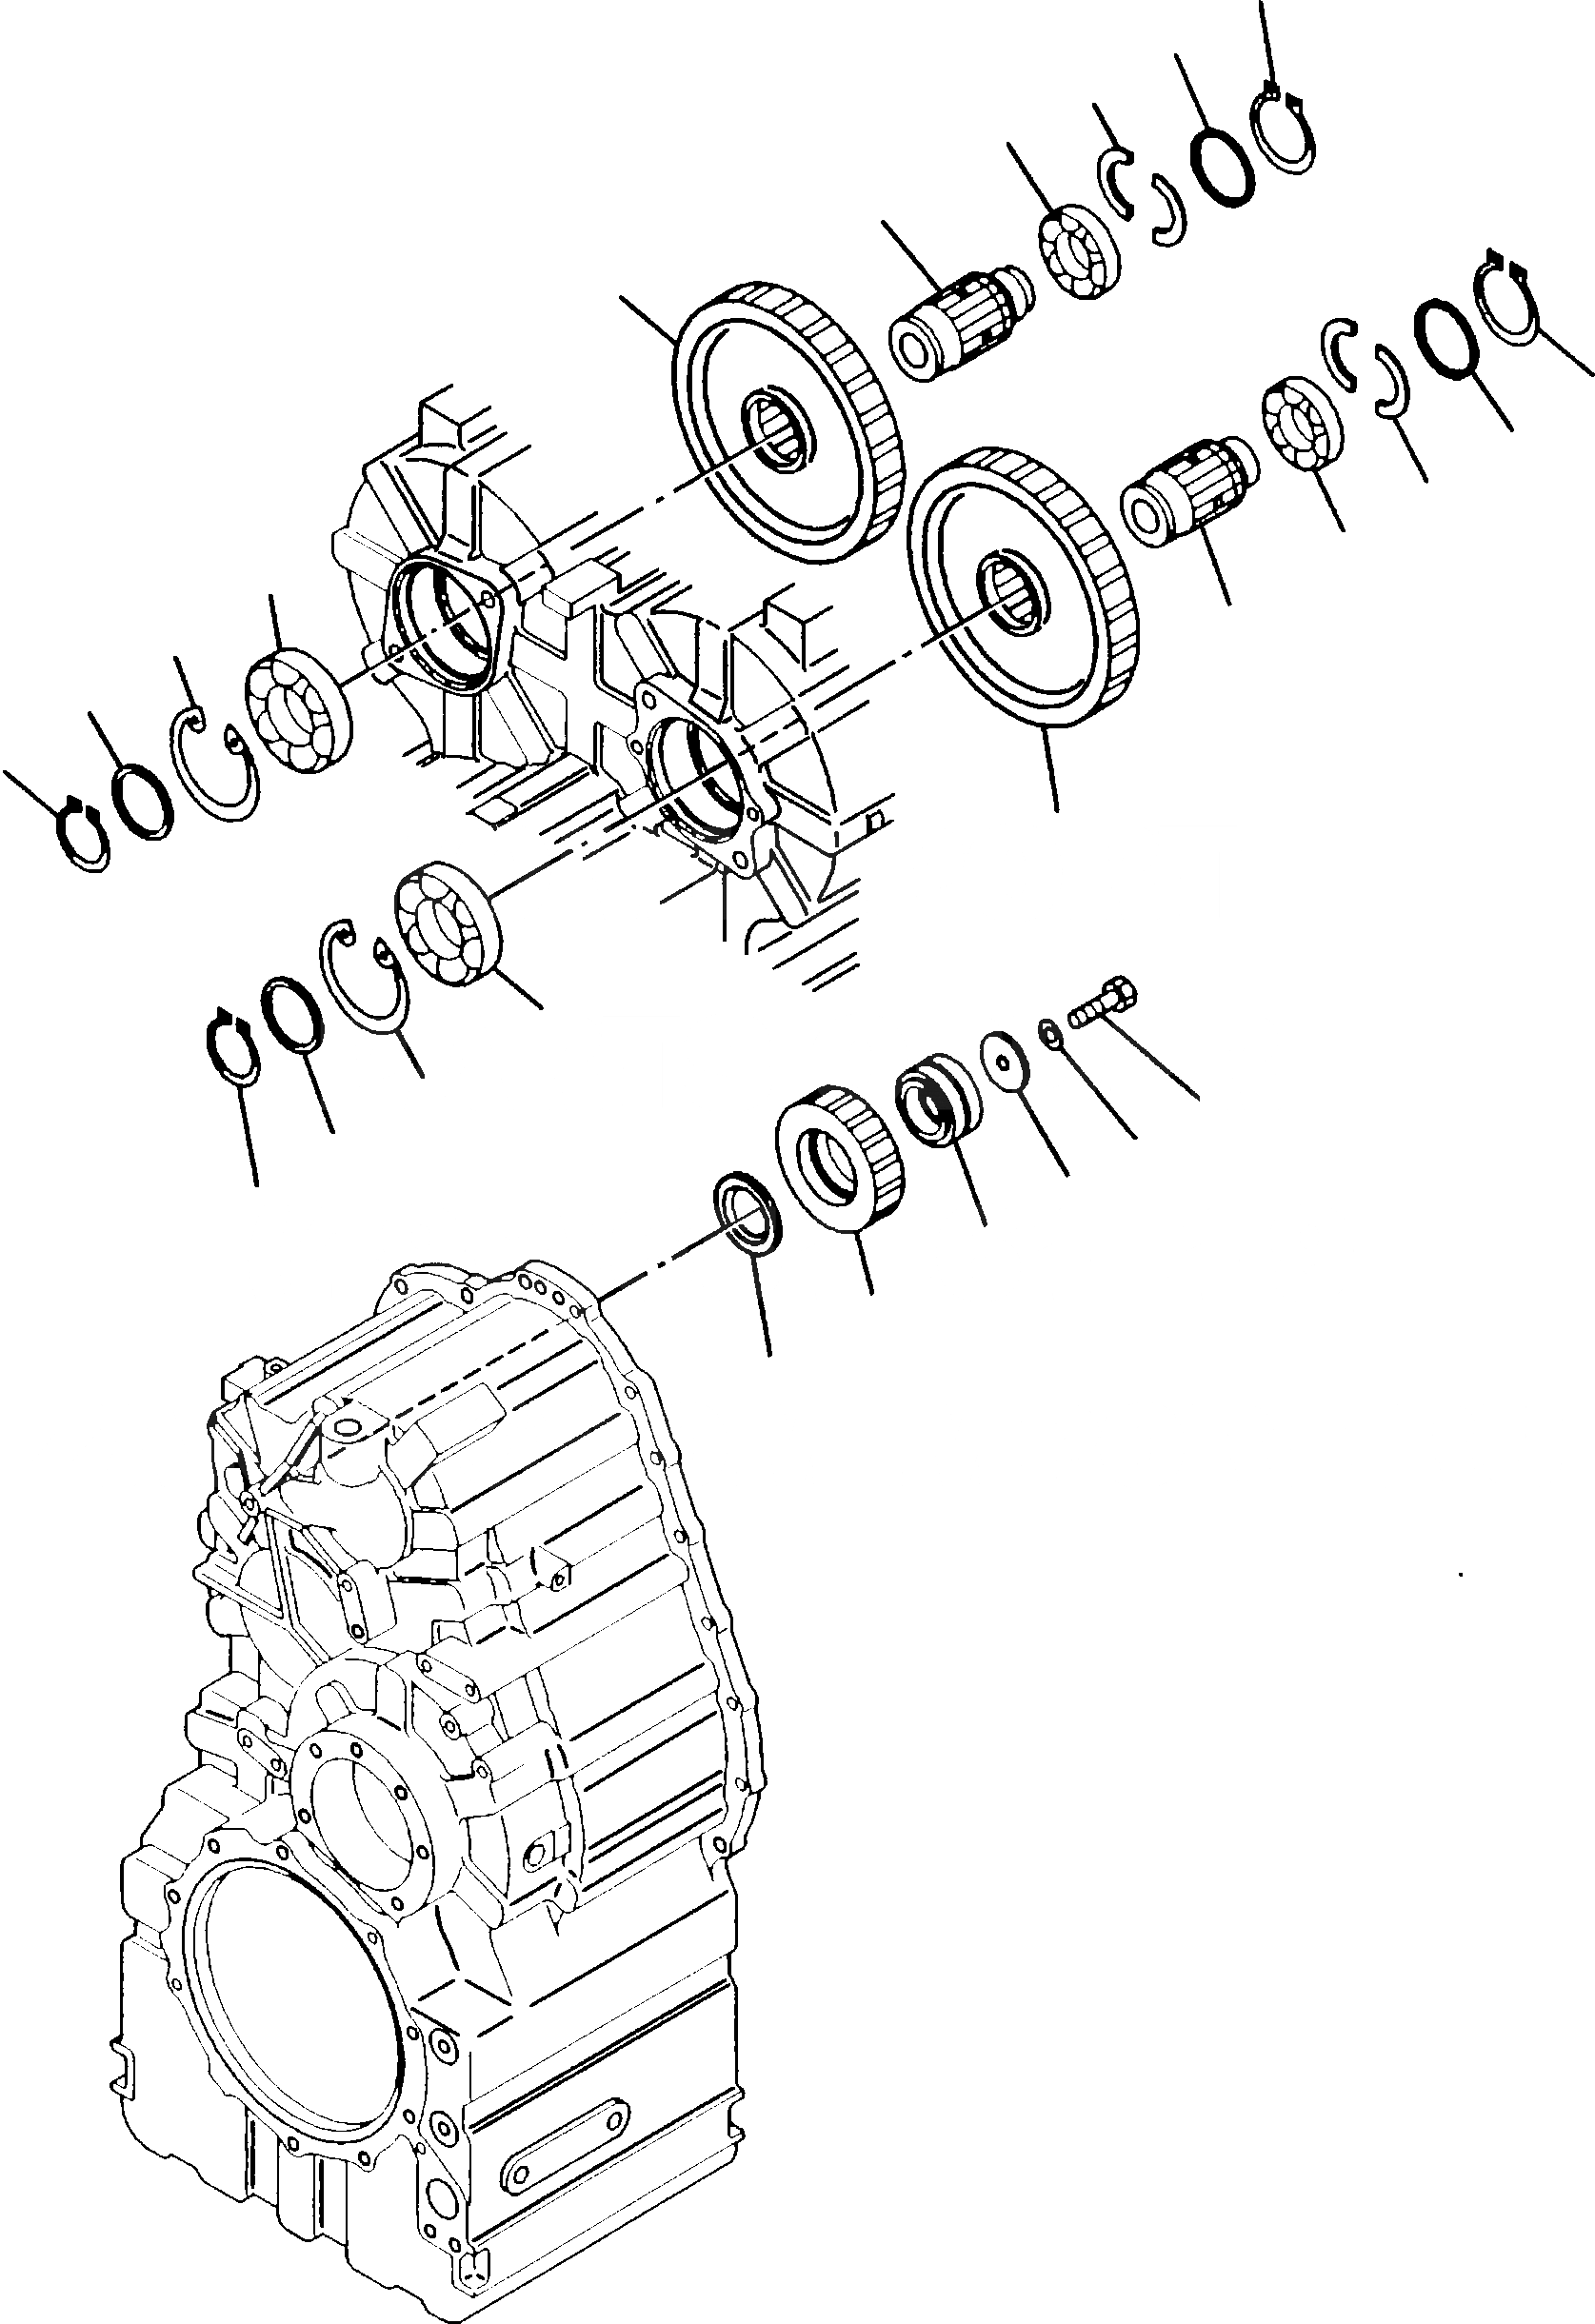 Схема запчастей Komatsu WA480-5 - ПРИВОДS И ВАЛS ТРАНСМИССИЯ, КРЕСТОВИНА